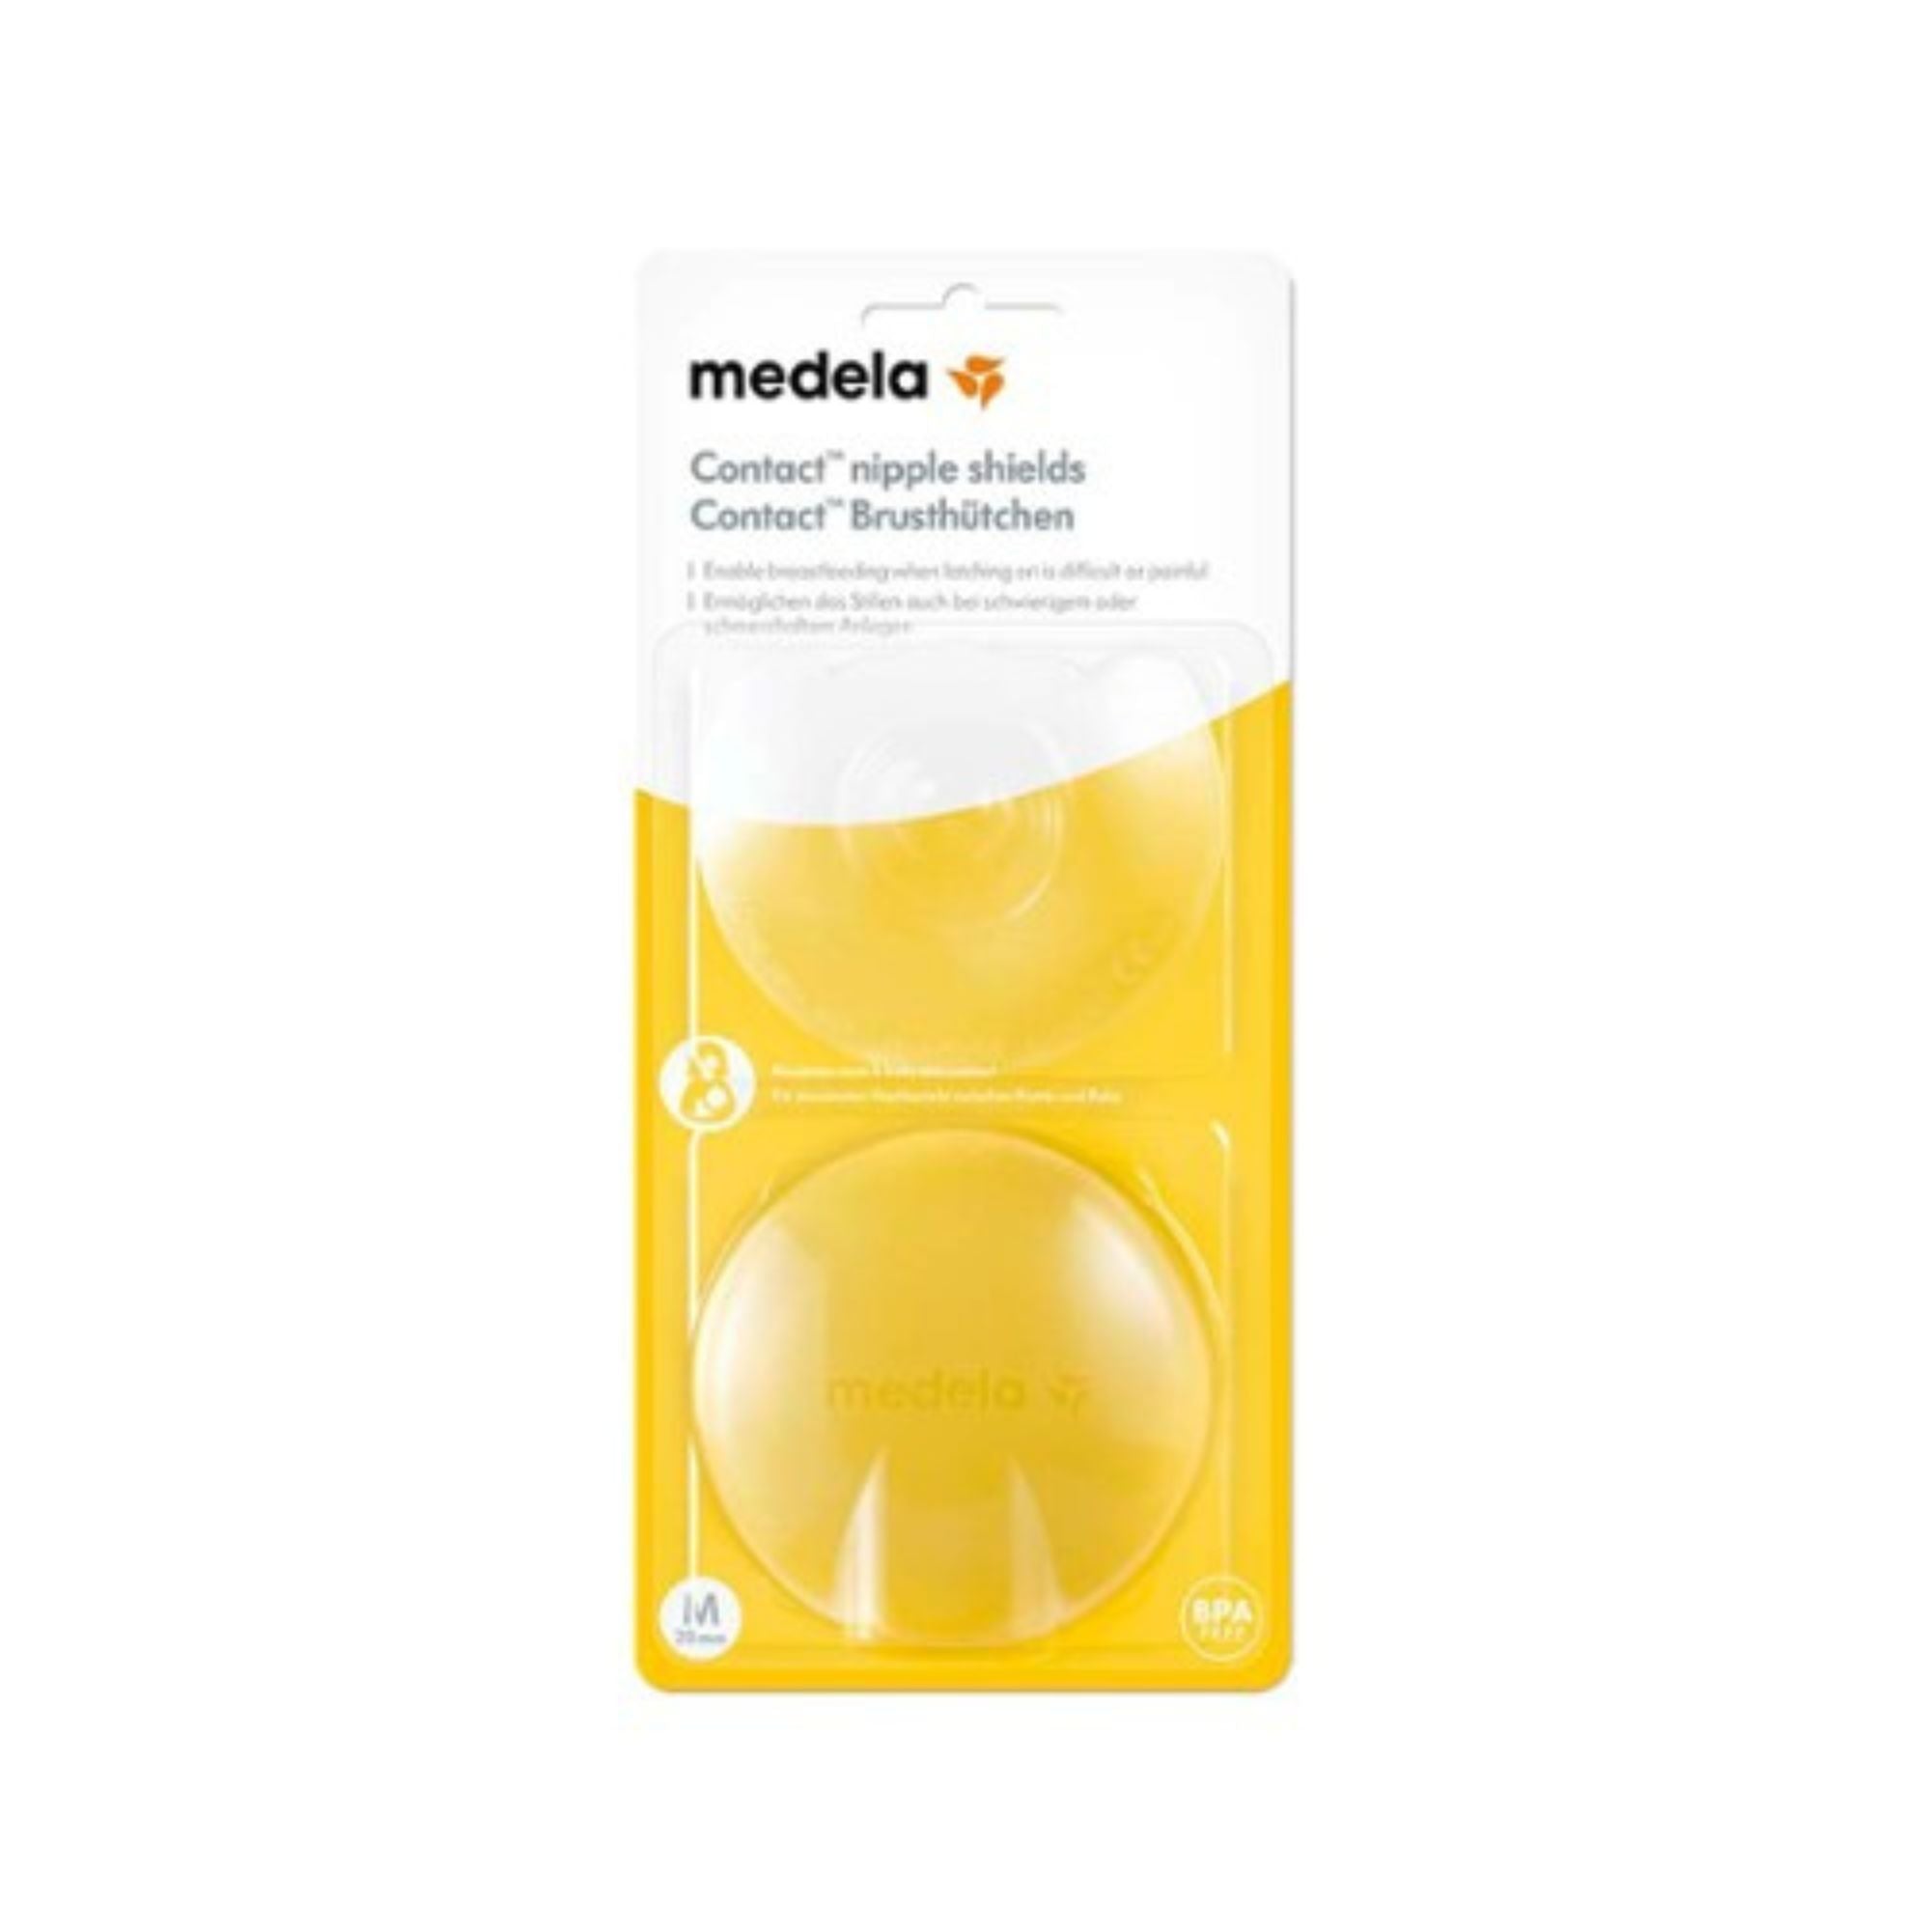 Medela Contact Nipple Shields